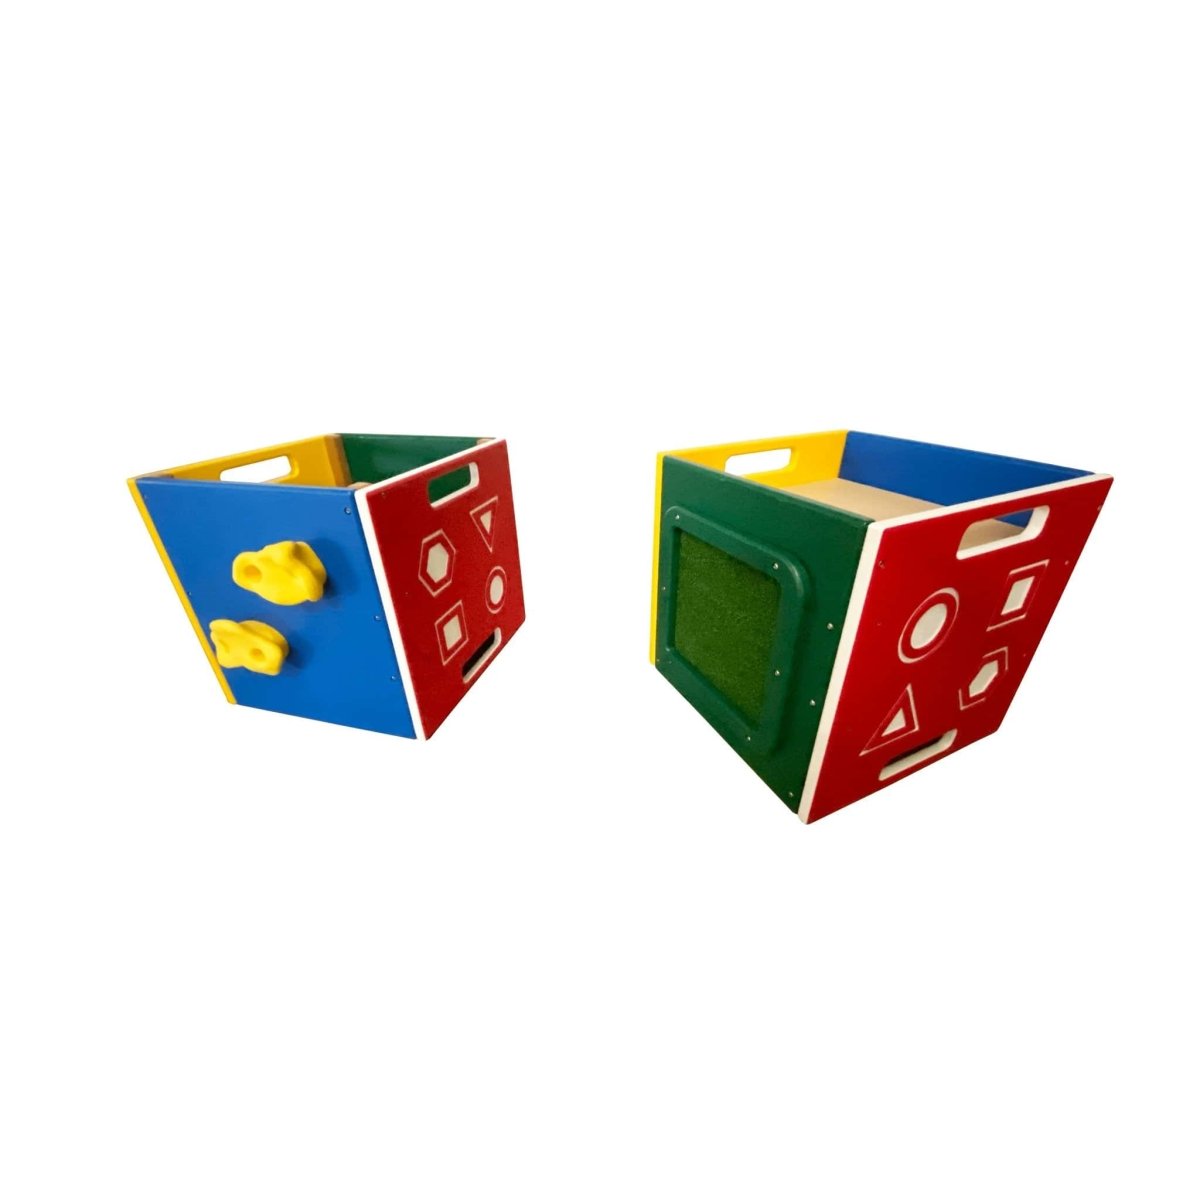 Sensory Cube - Learning & Sensory Panels - Playtopia, Inc.